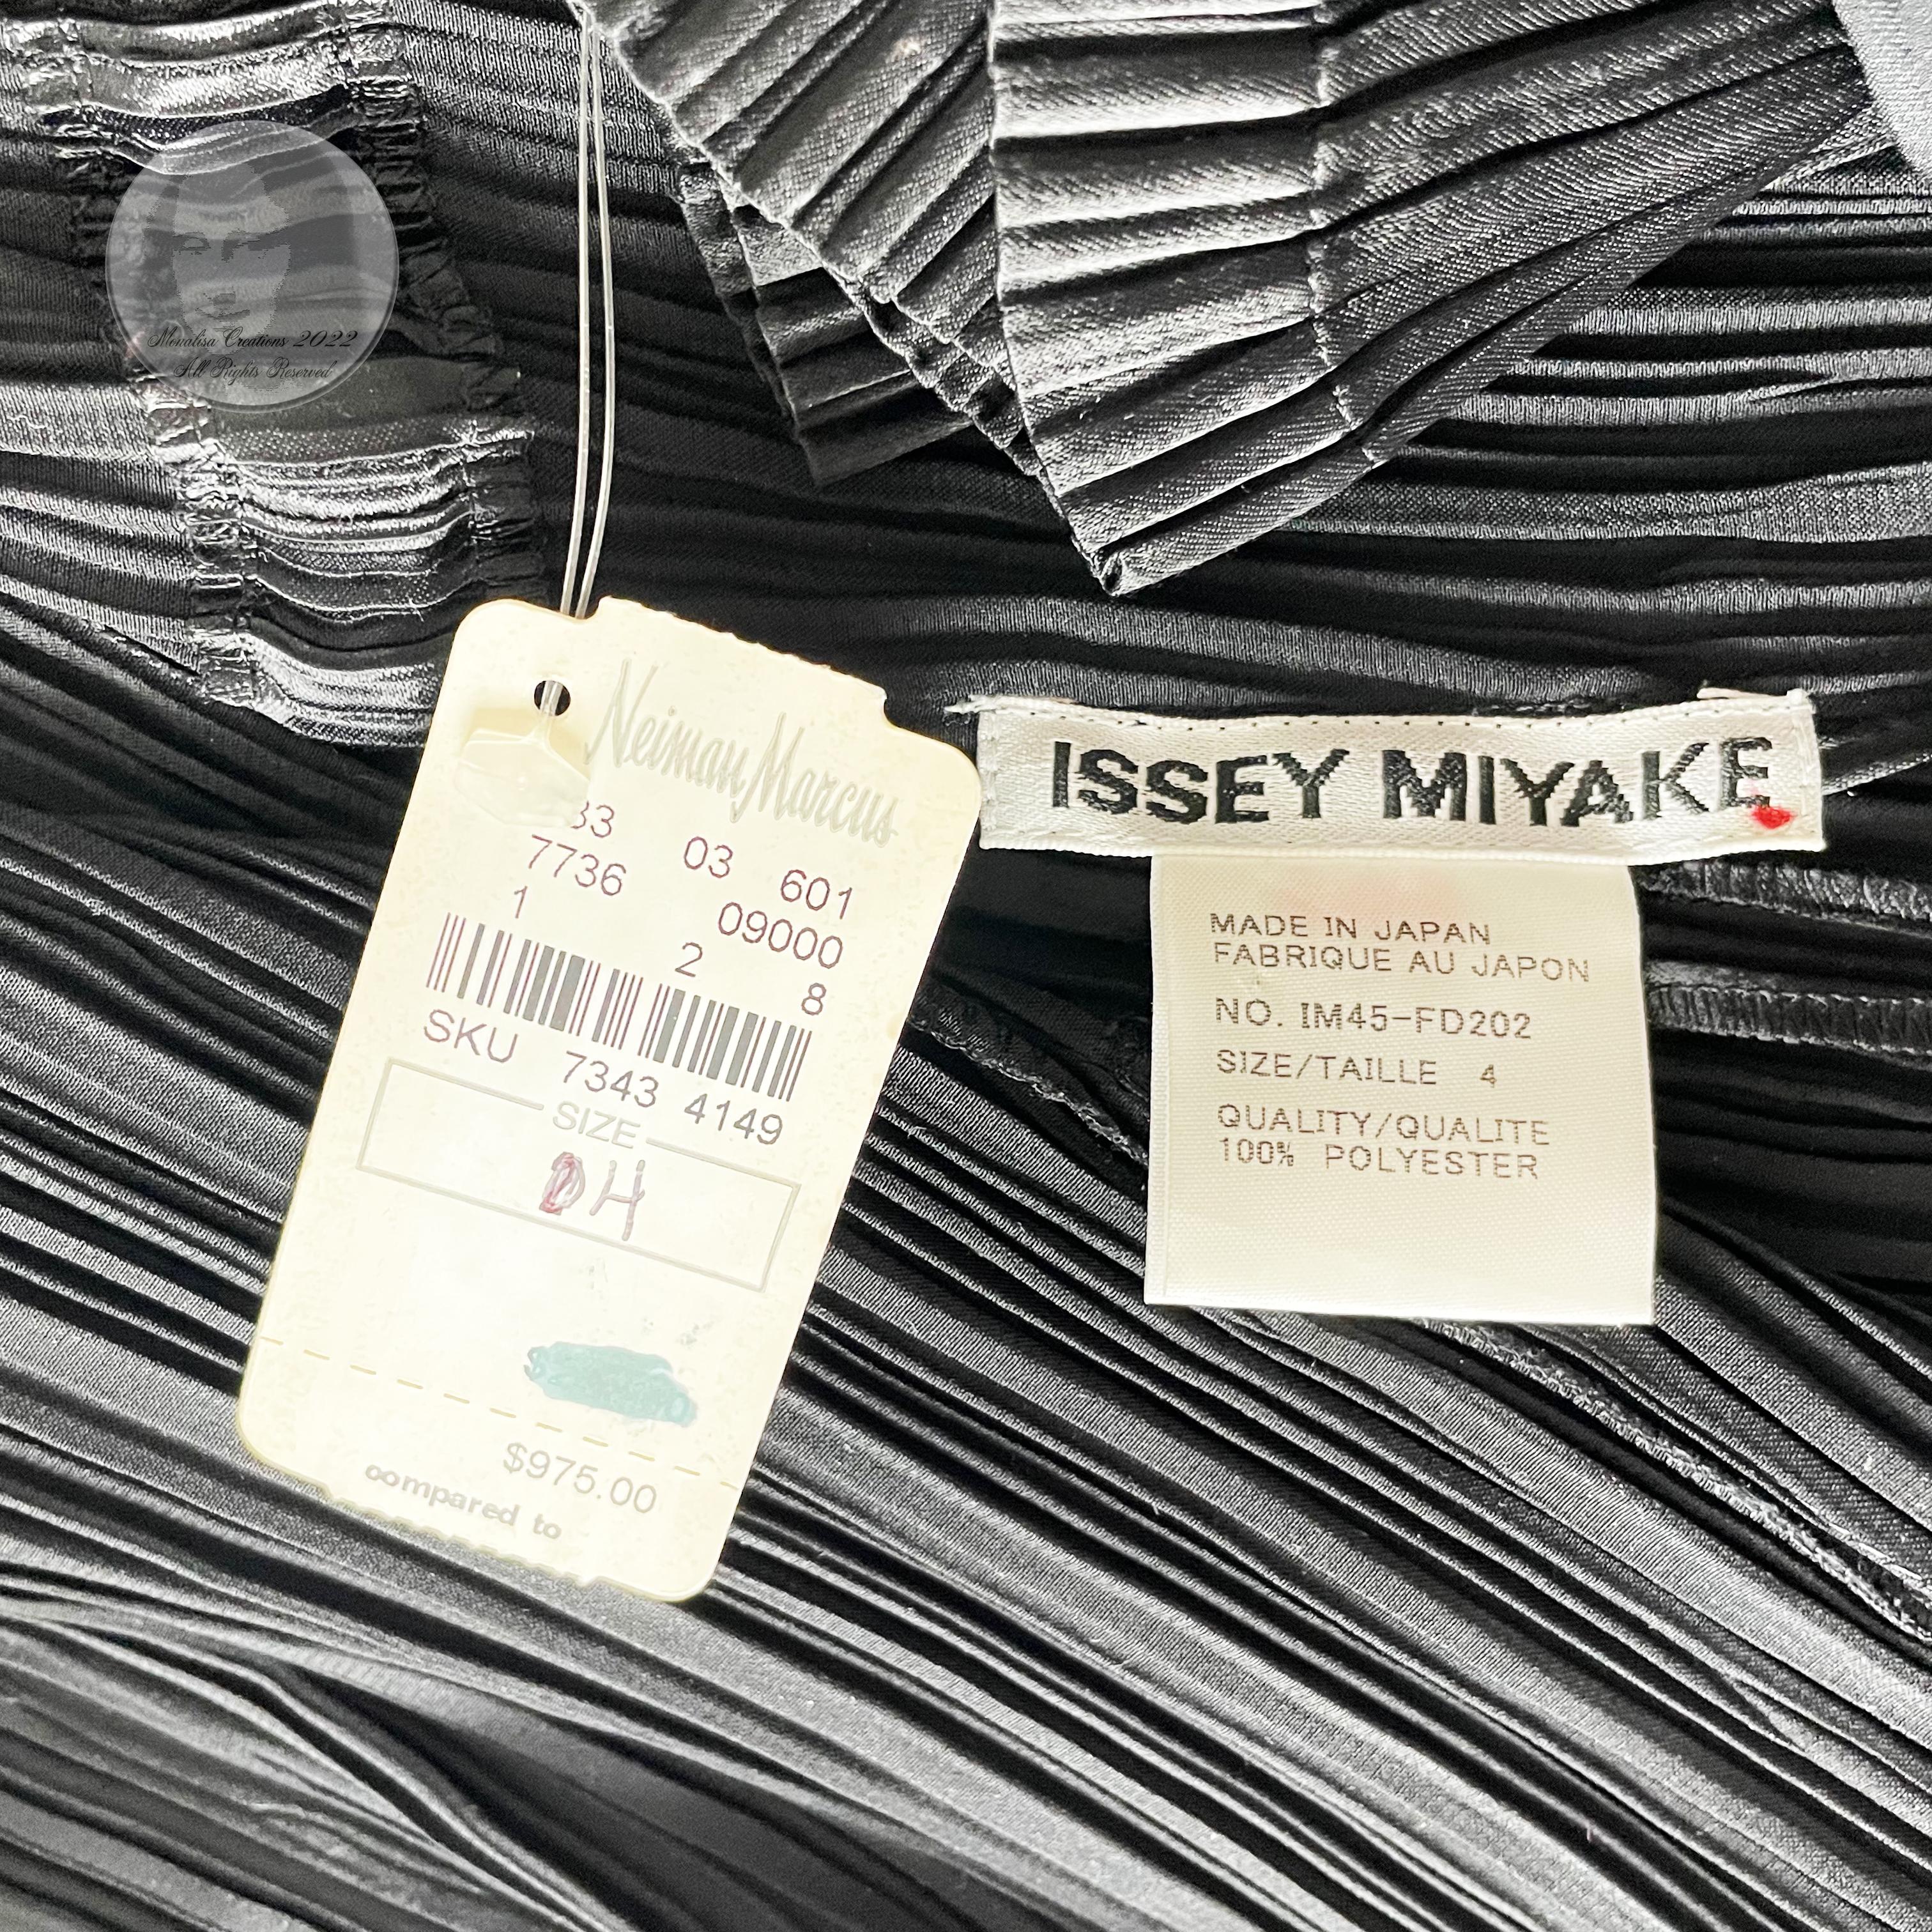 Issey Miyake Jacket Black Pleated Pointed Hem Tails Neiman Marcus NWT NOS 90s  3